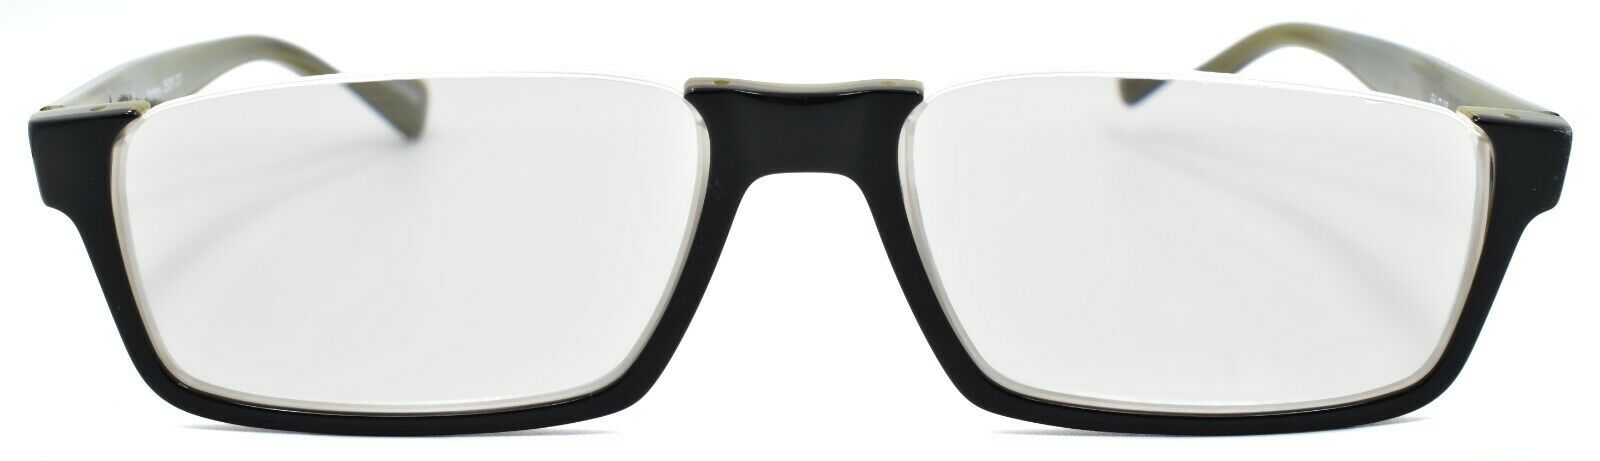 2-Eyebobs Size Matters 2509 07 Men's Reading Glasses Semi-Rimless Black Horn +1.50-842754109642-IKSpecs